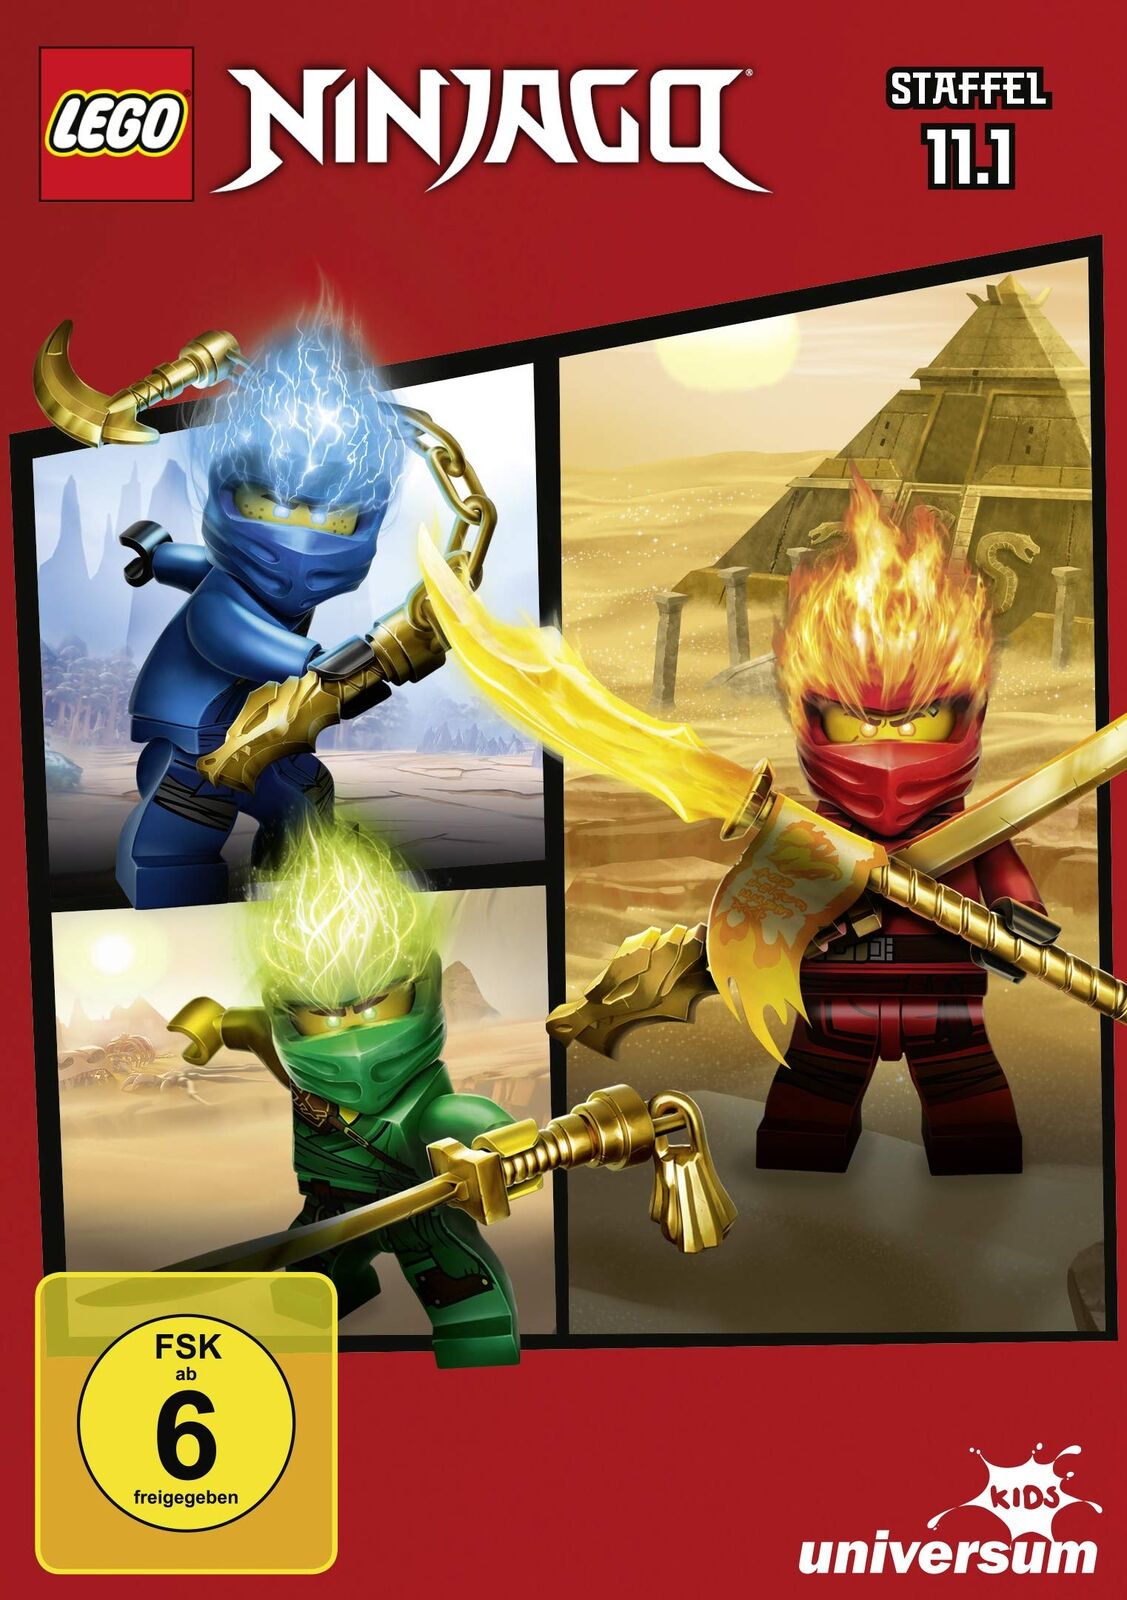 Lego Ninjago - Staffel 11.1 (DVD) | eBay